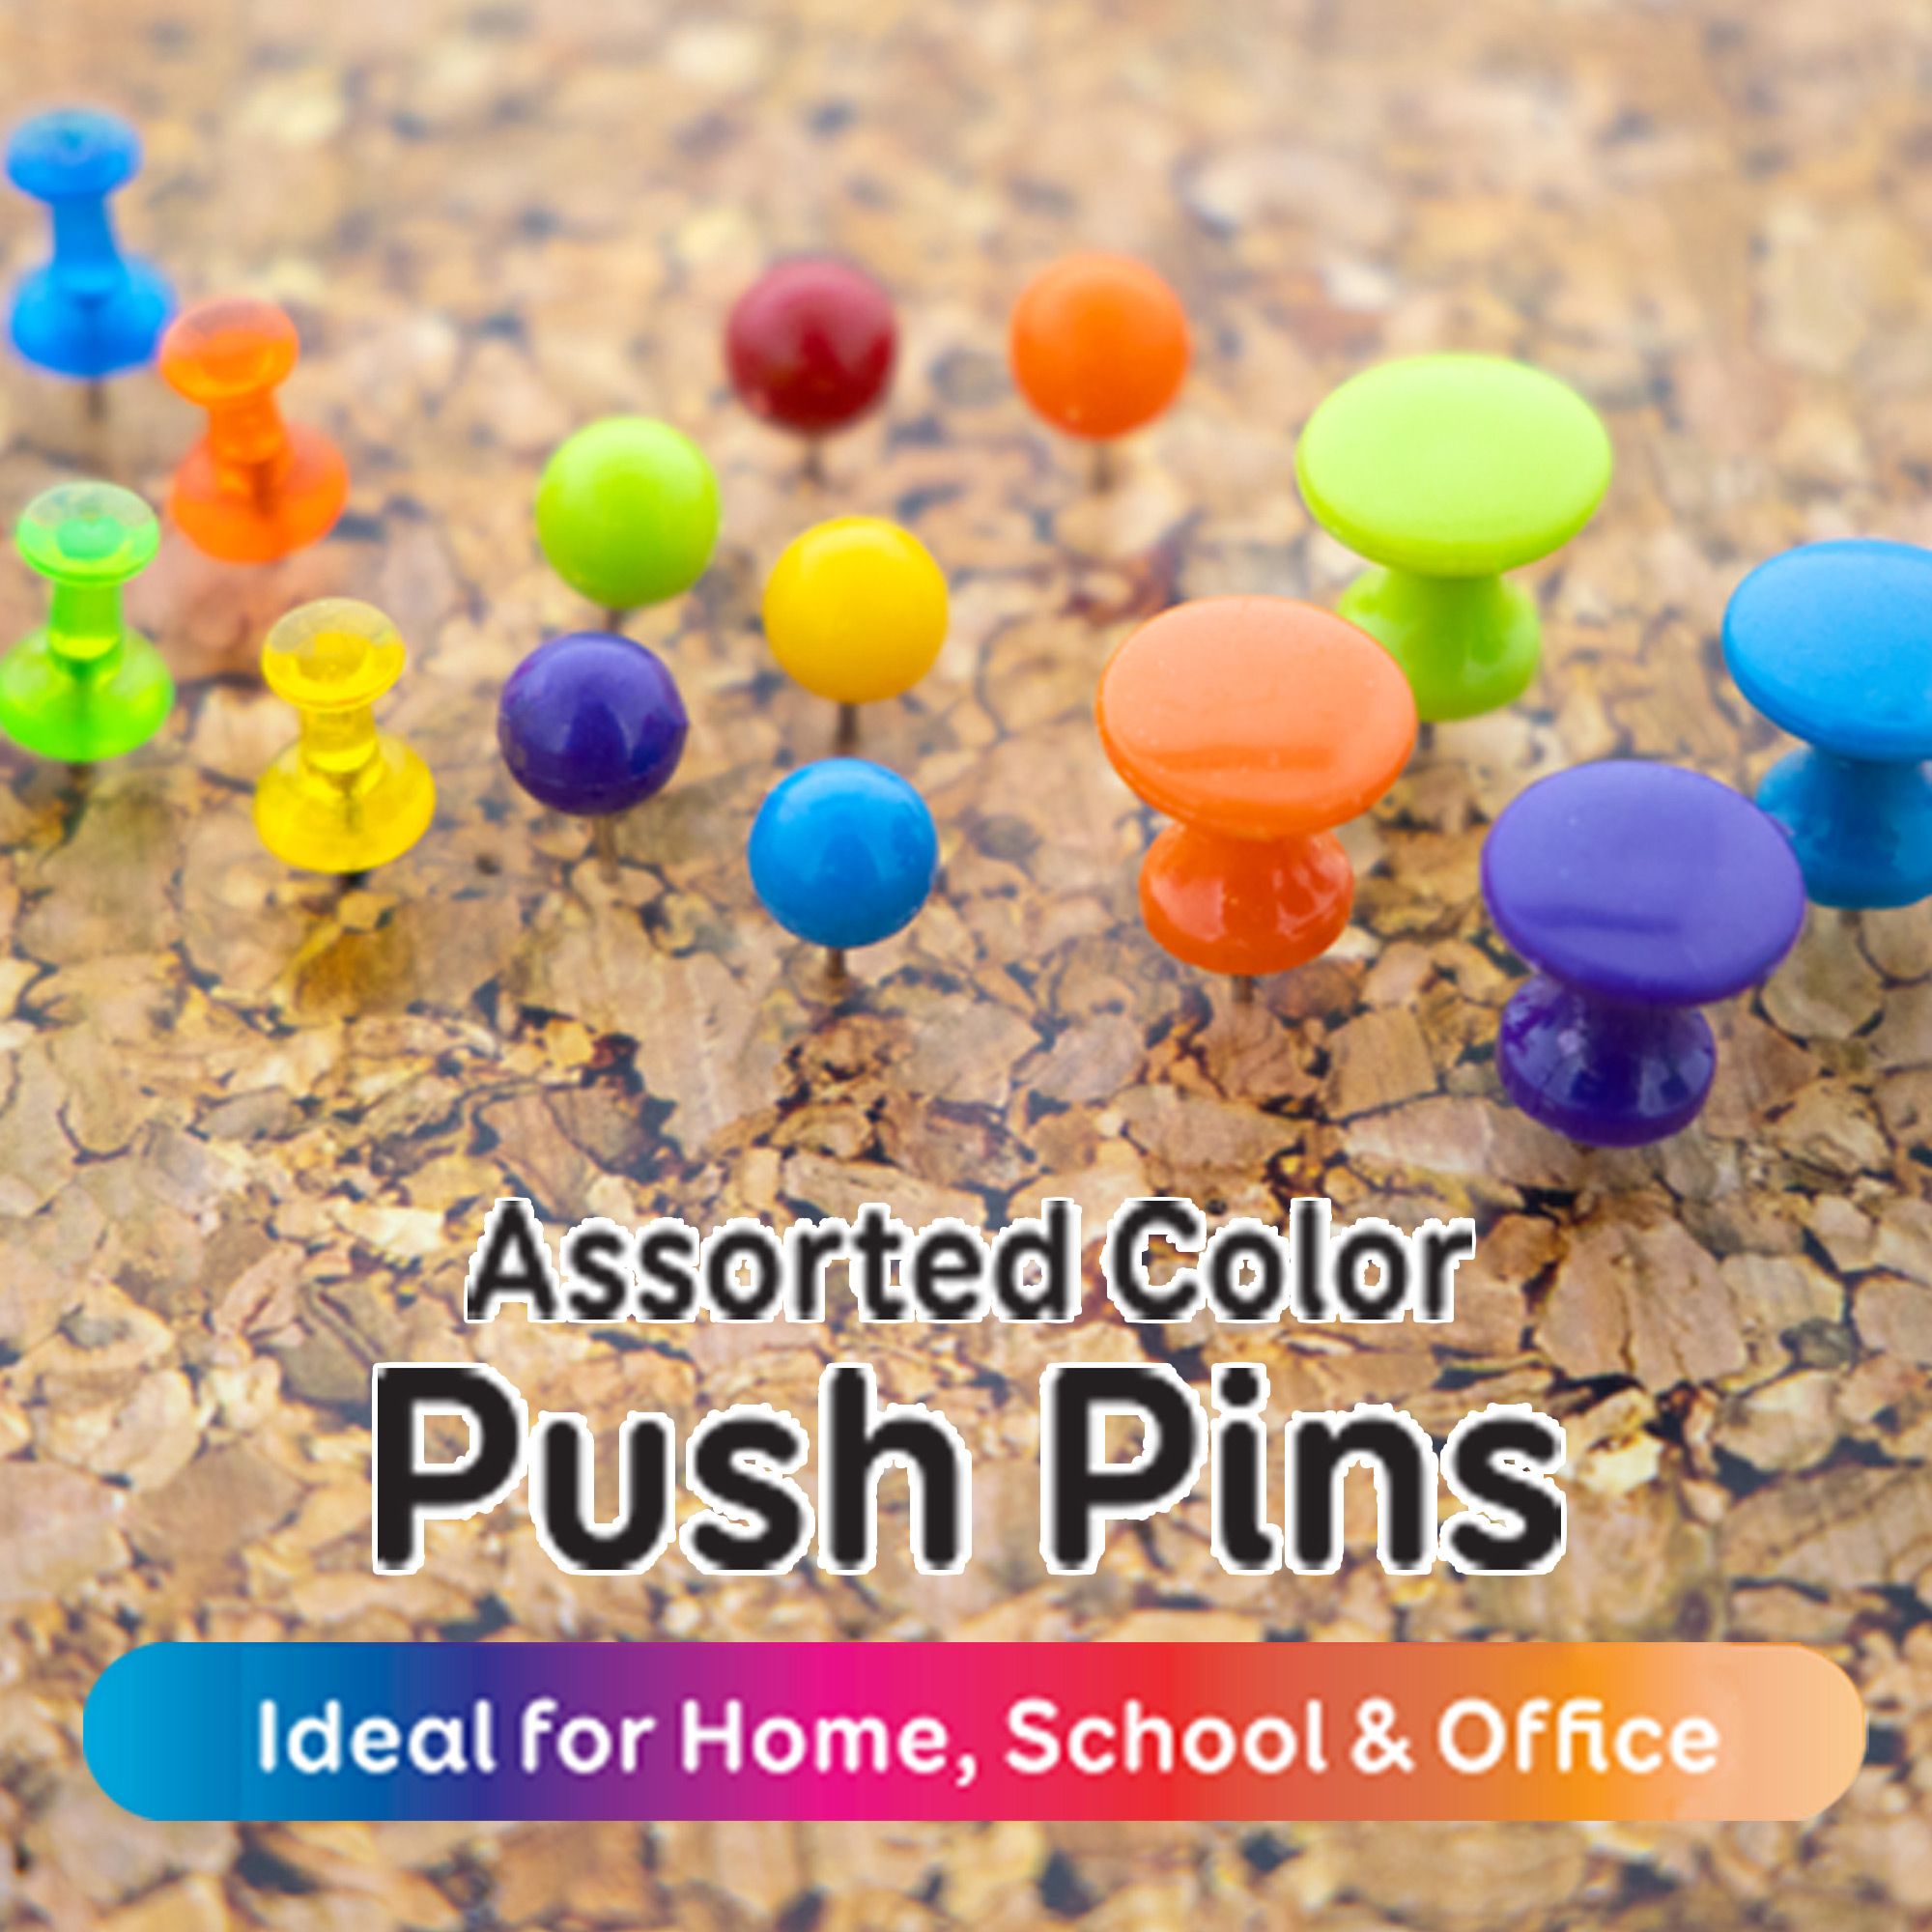 Clear Pushpins by B2C®, 100ct.